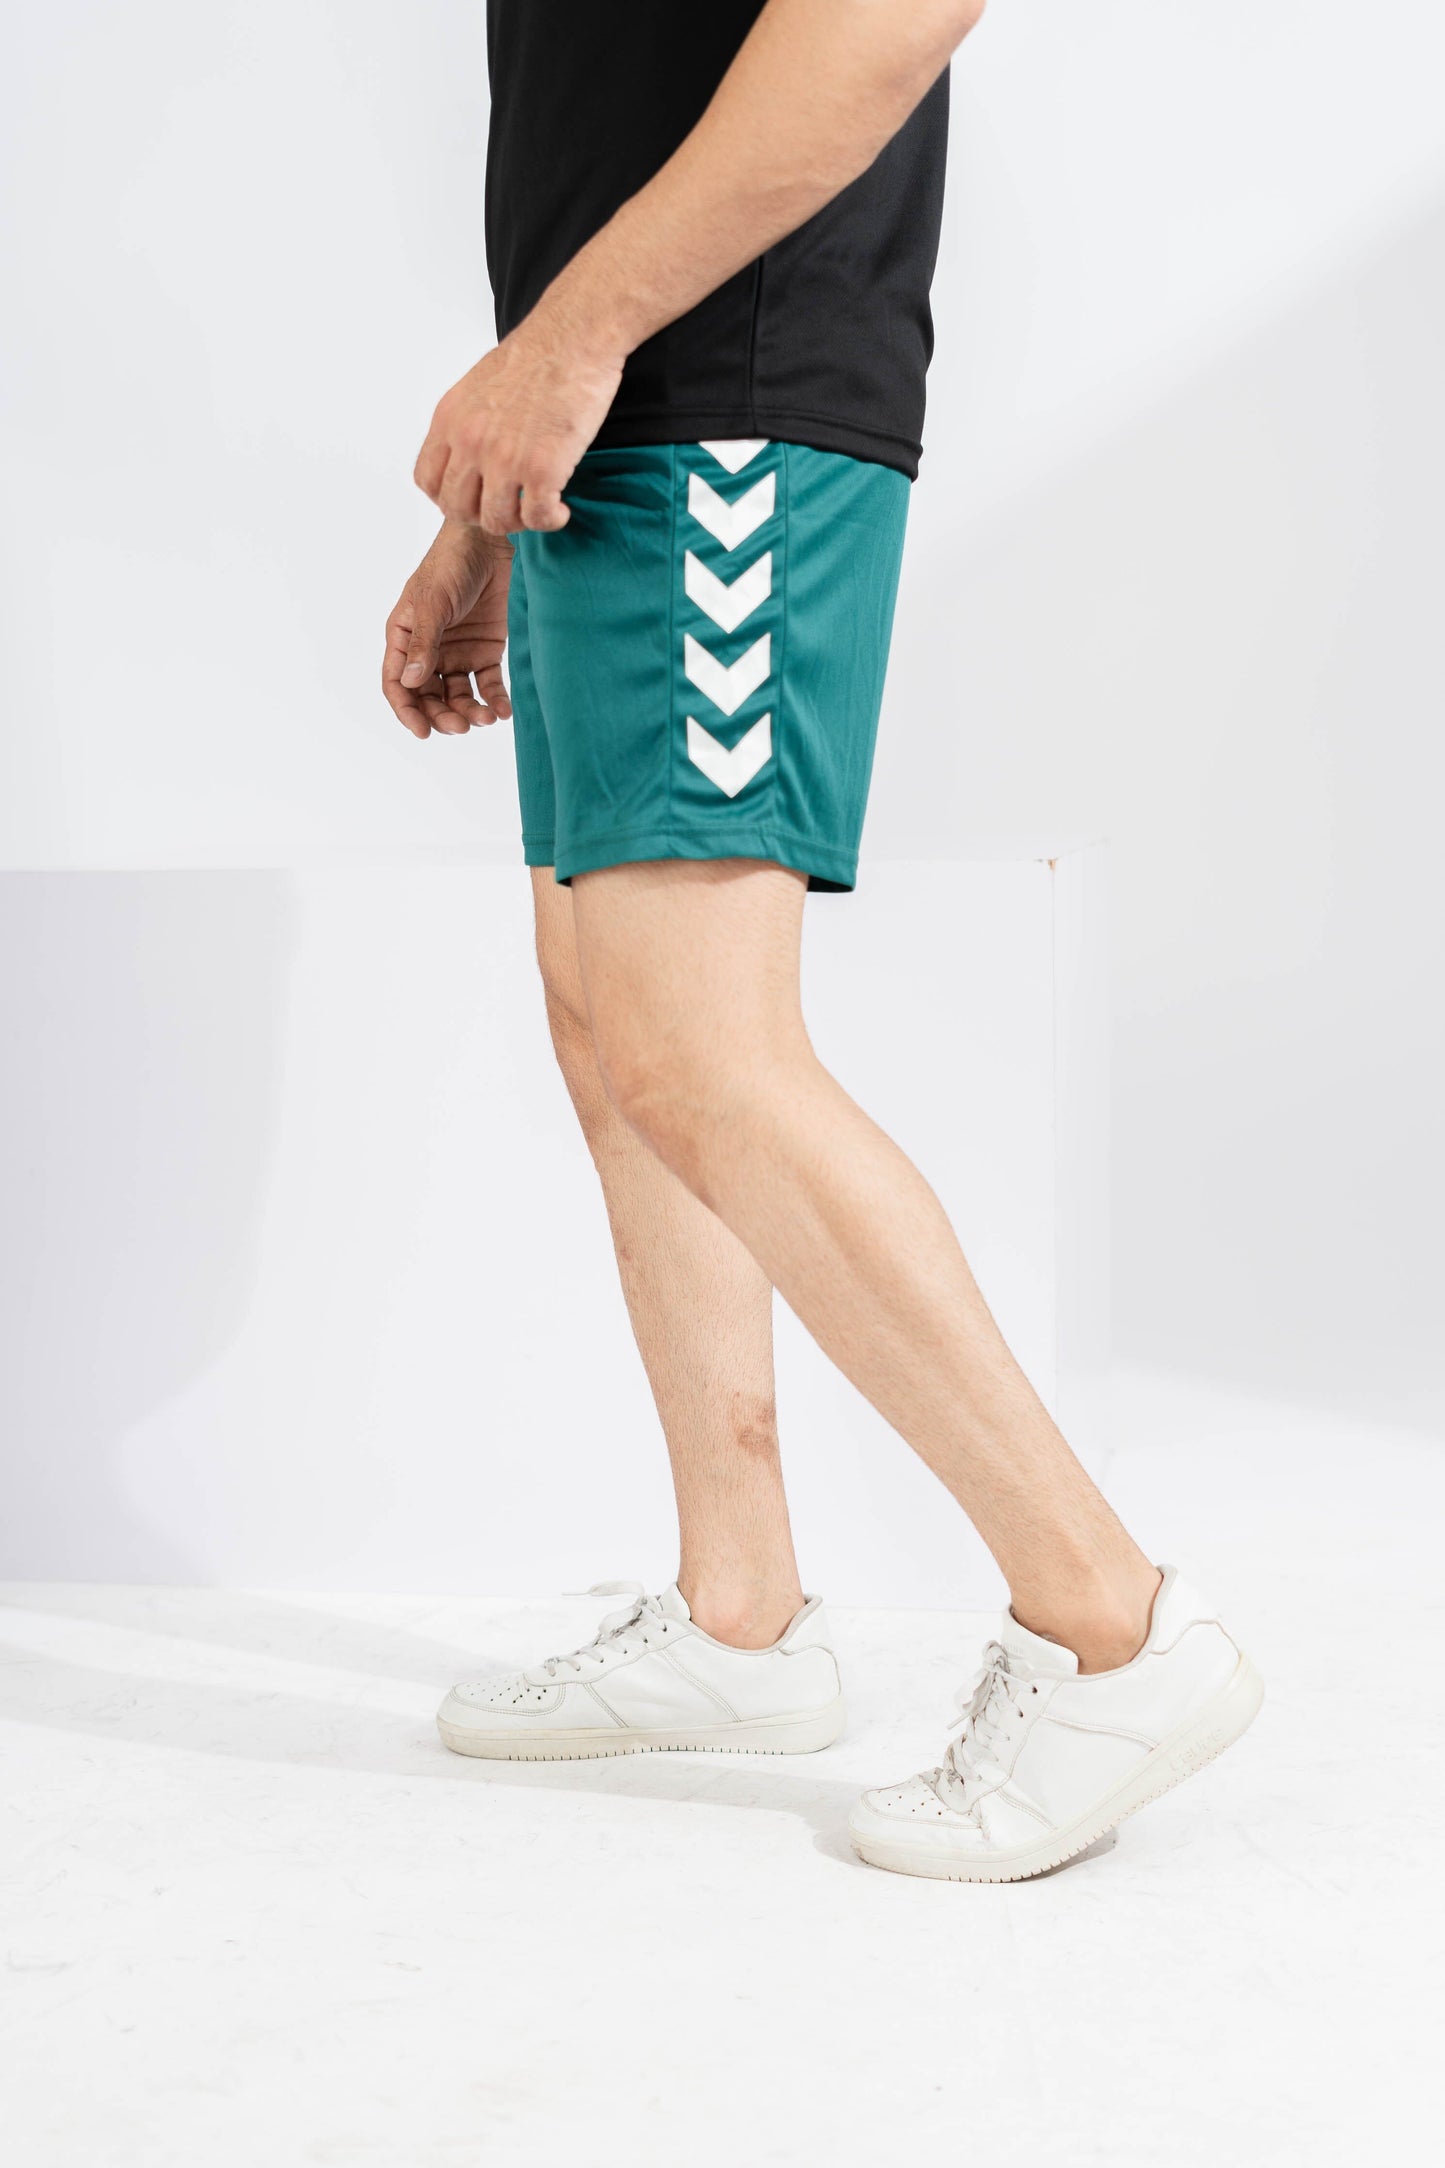 Hummel Men's Bentong Down Arrow Printed Activewear Shorts Men's Shorts HAS Apparel 